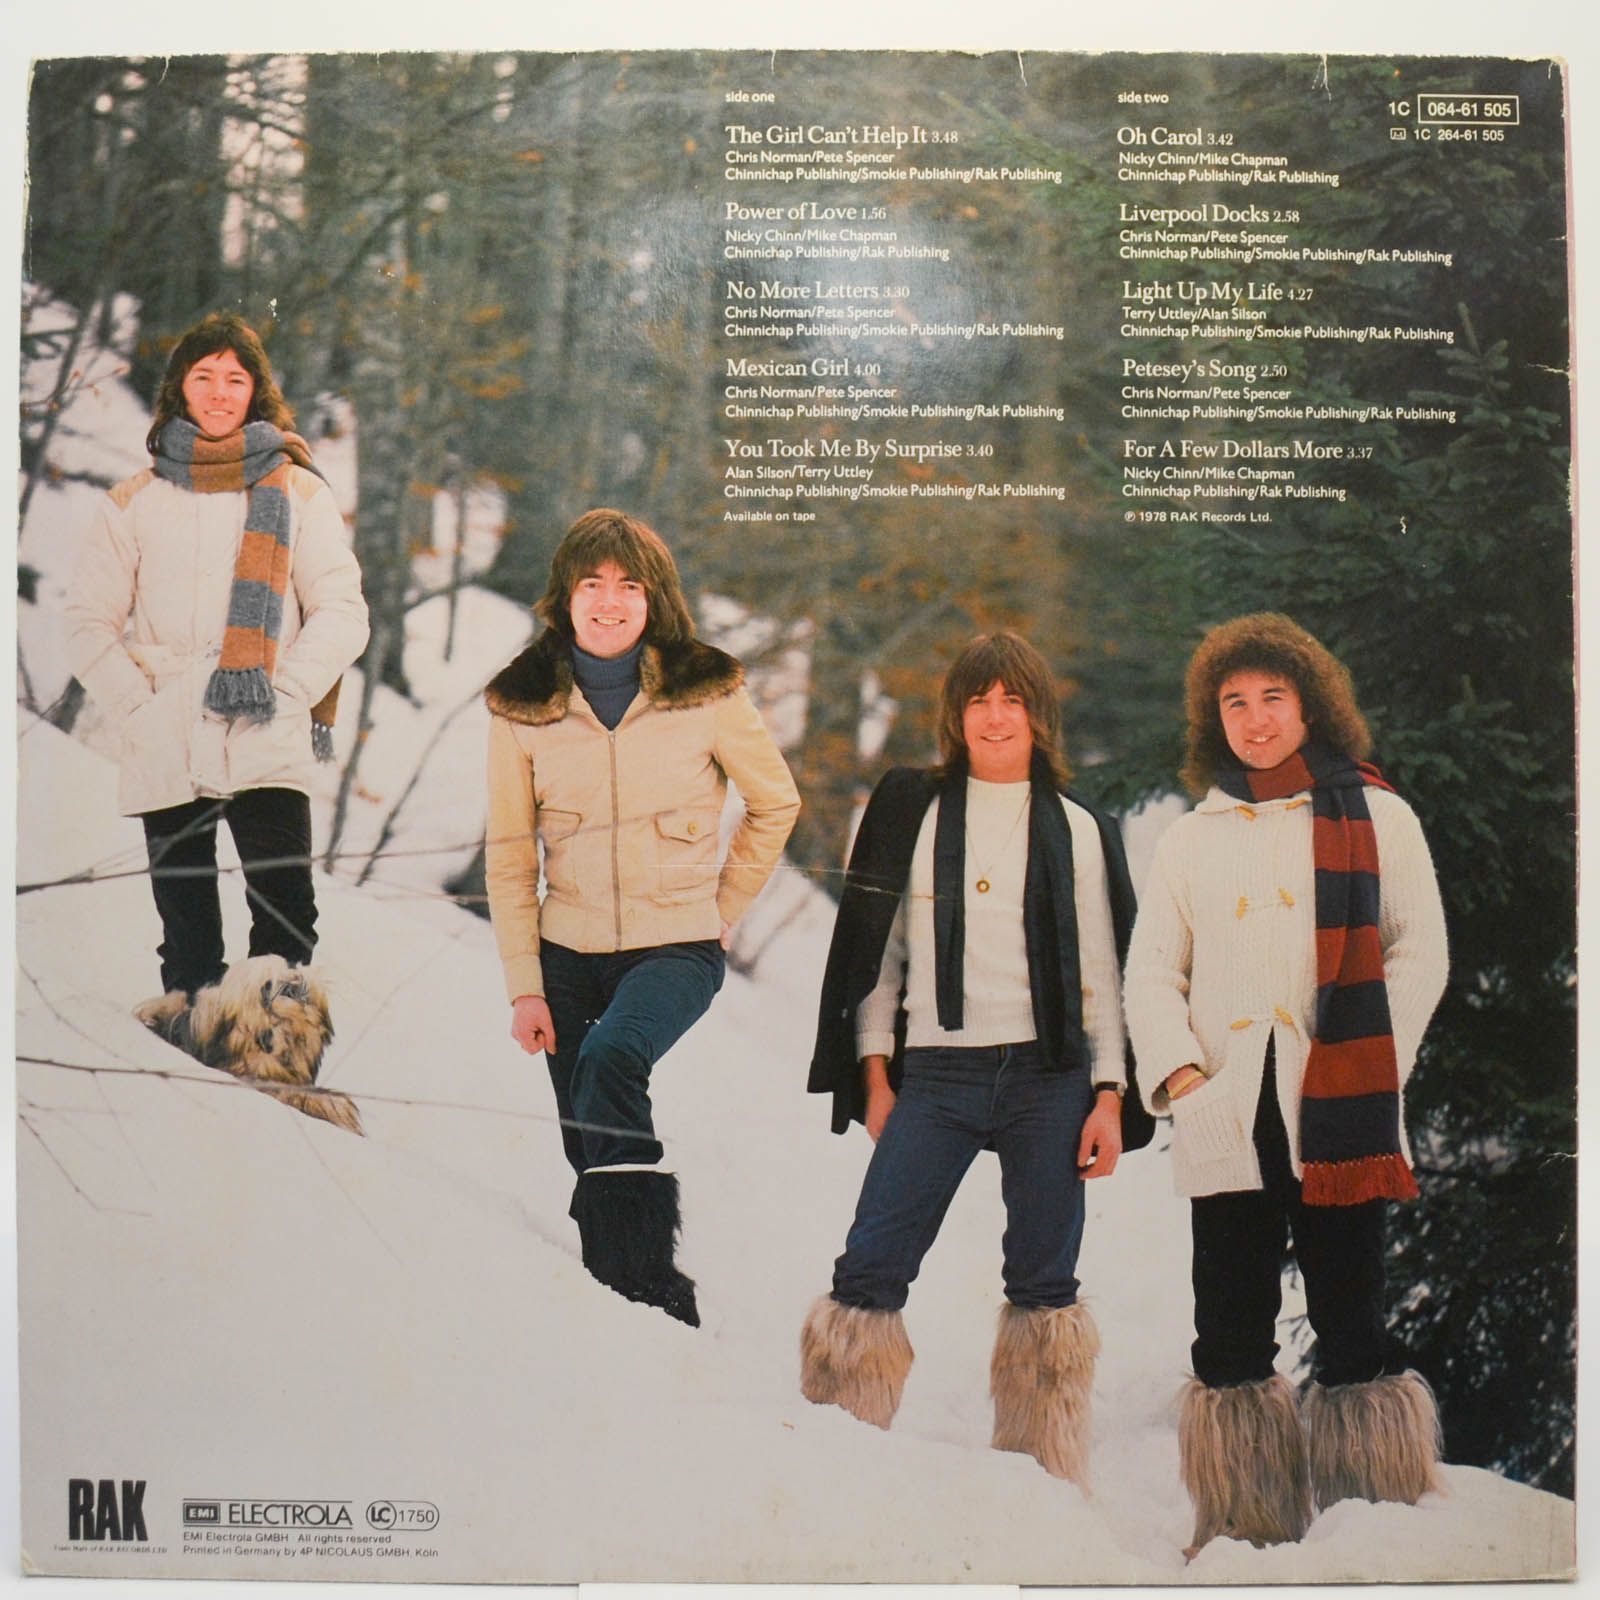 Smokie — The Montreux Album, 1978